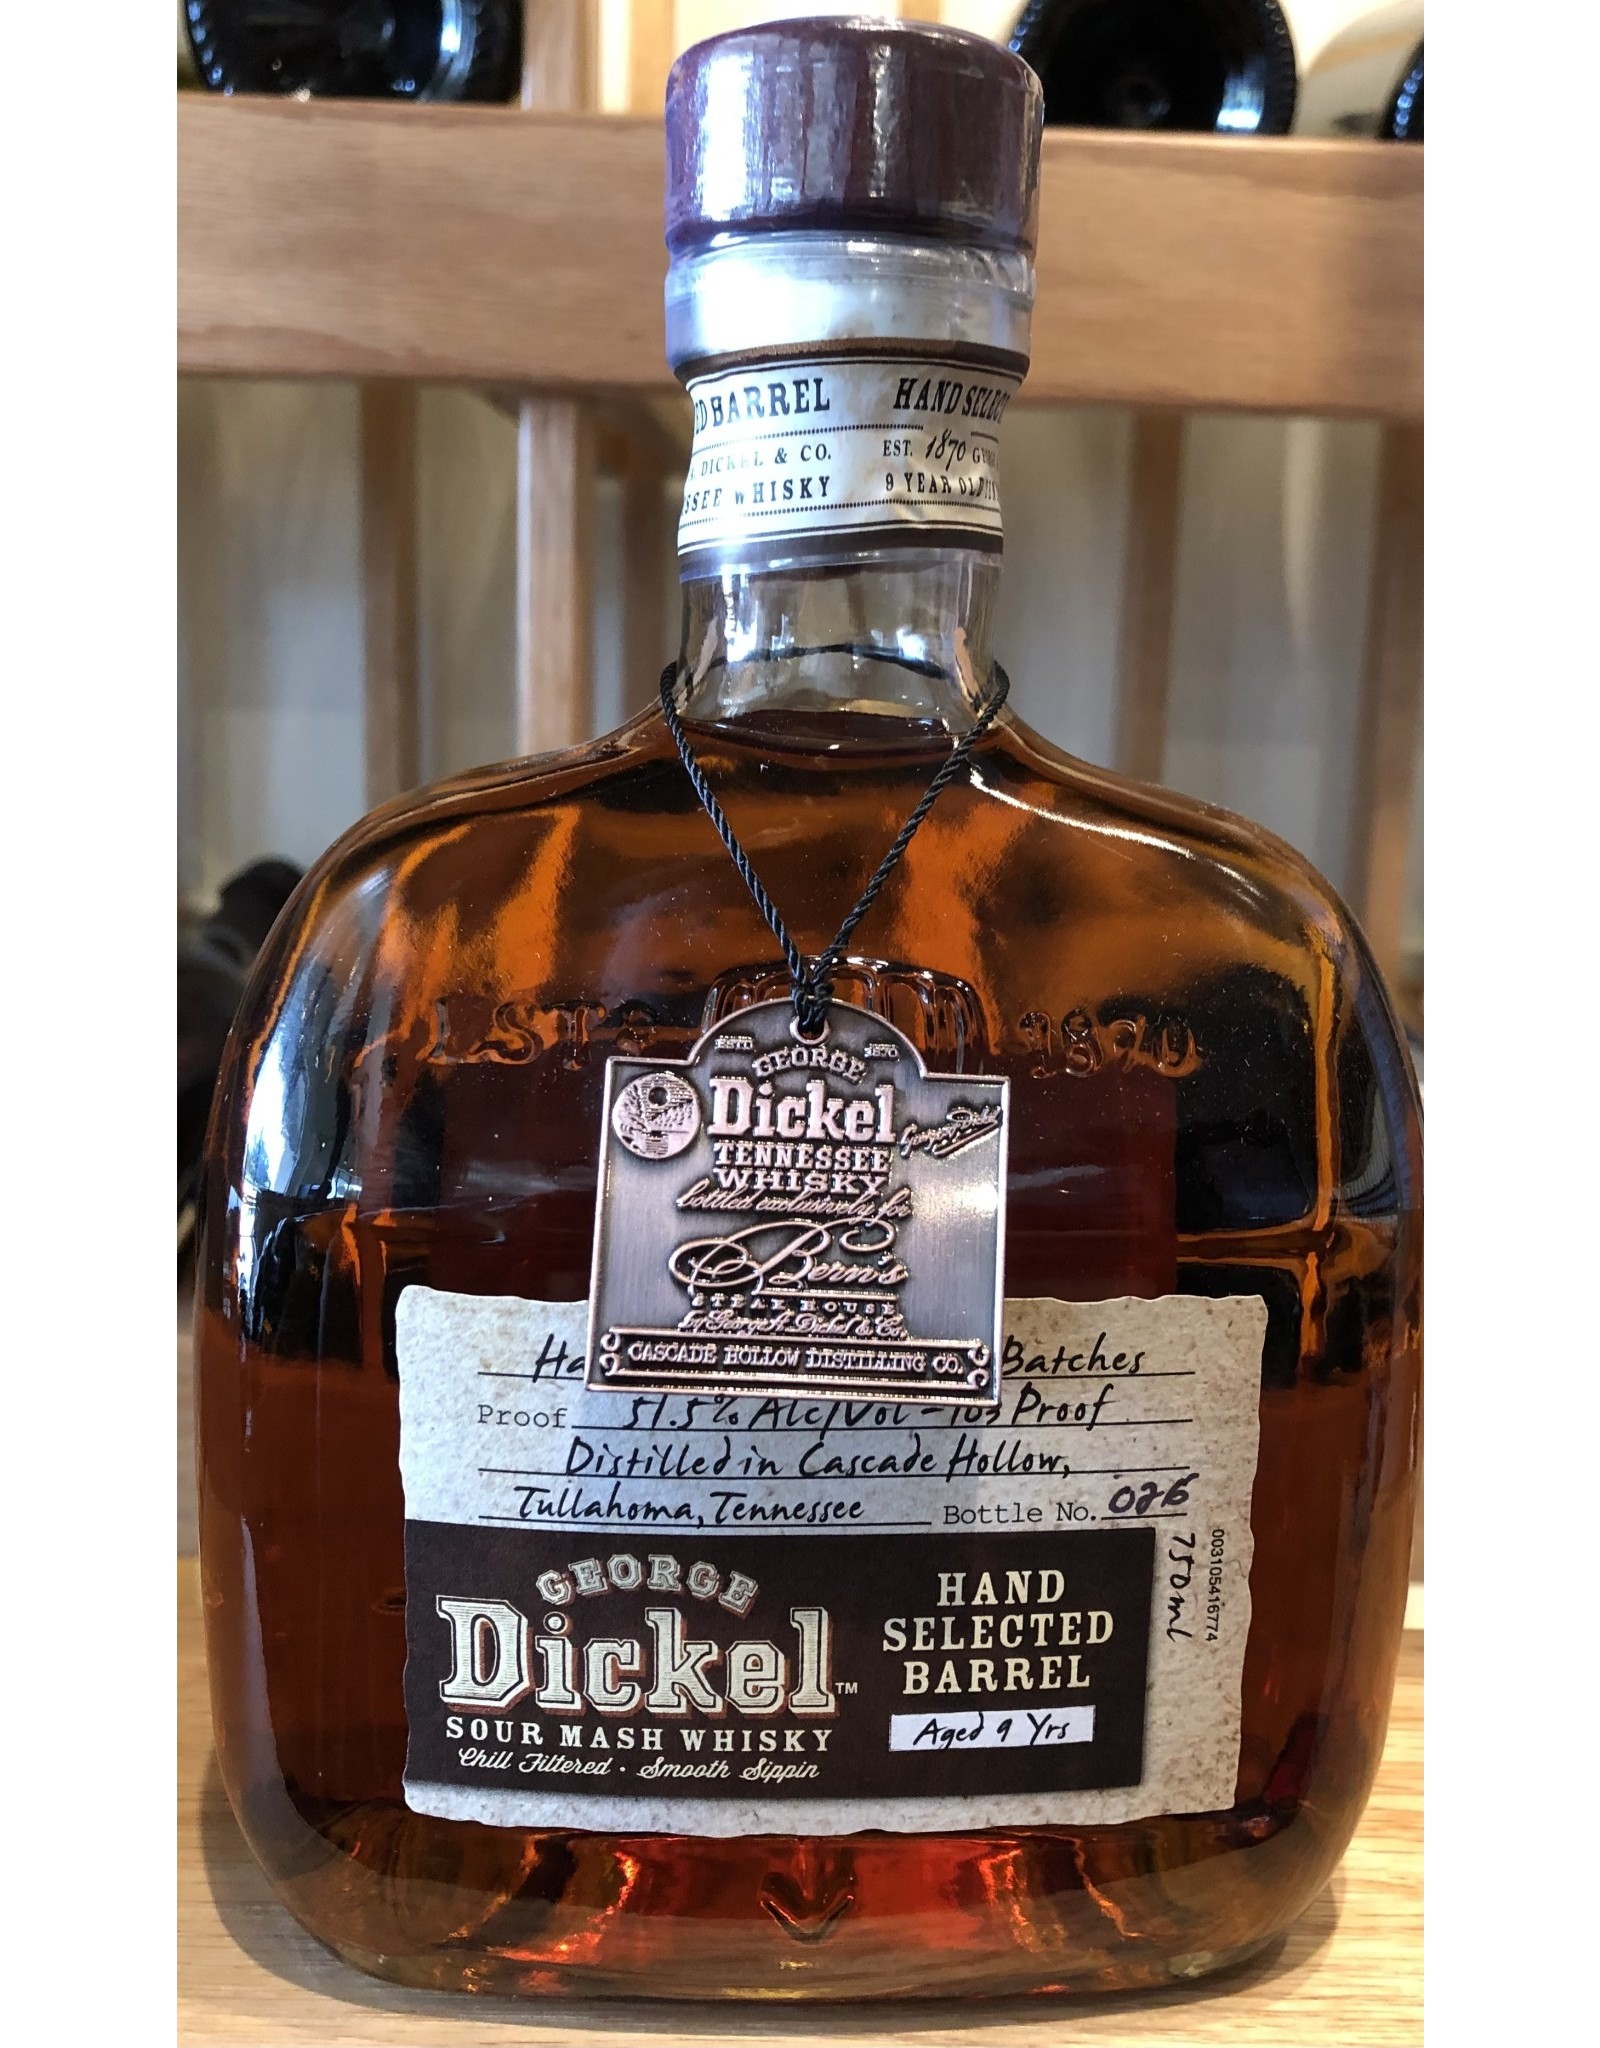 1. Bern's Select George Dickel Barrel 9 year Single Barrel Tennessee Whisky